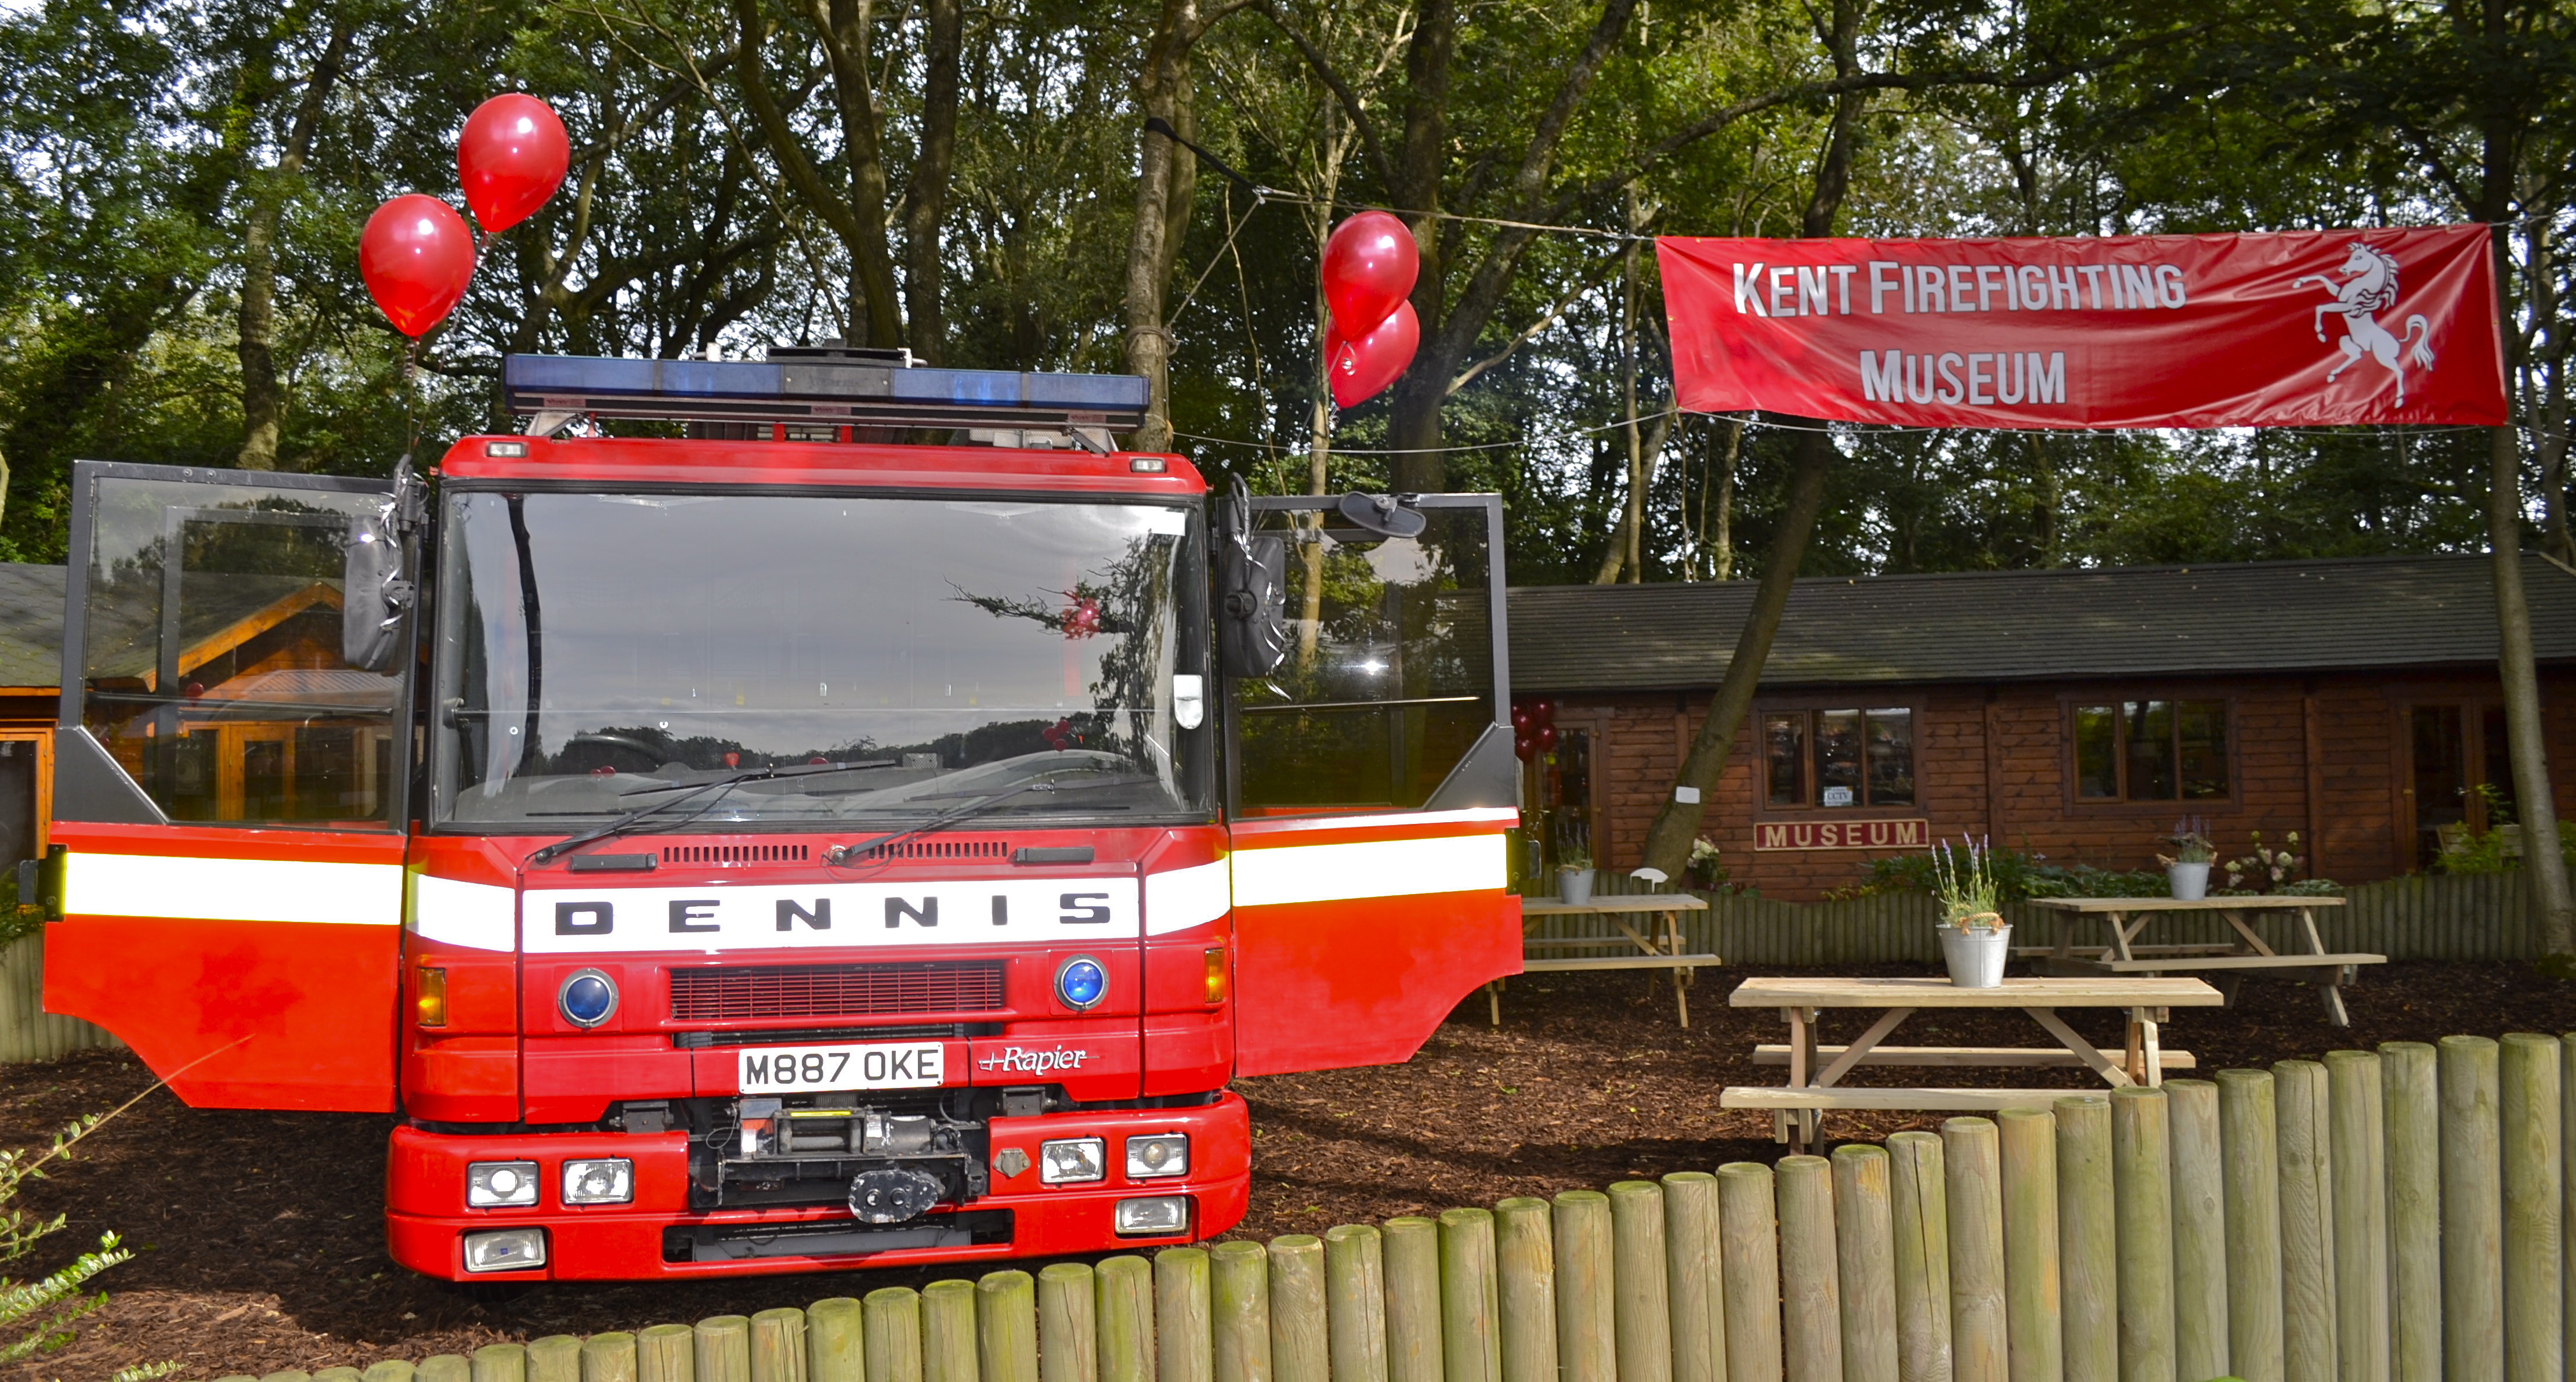 Our Dennis Rapier Fire Engine